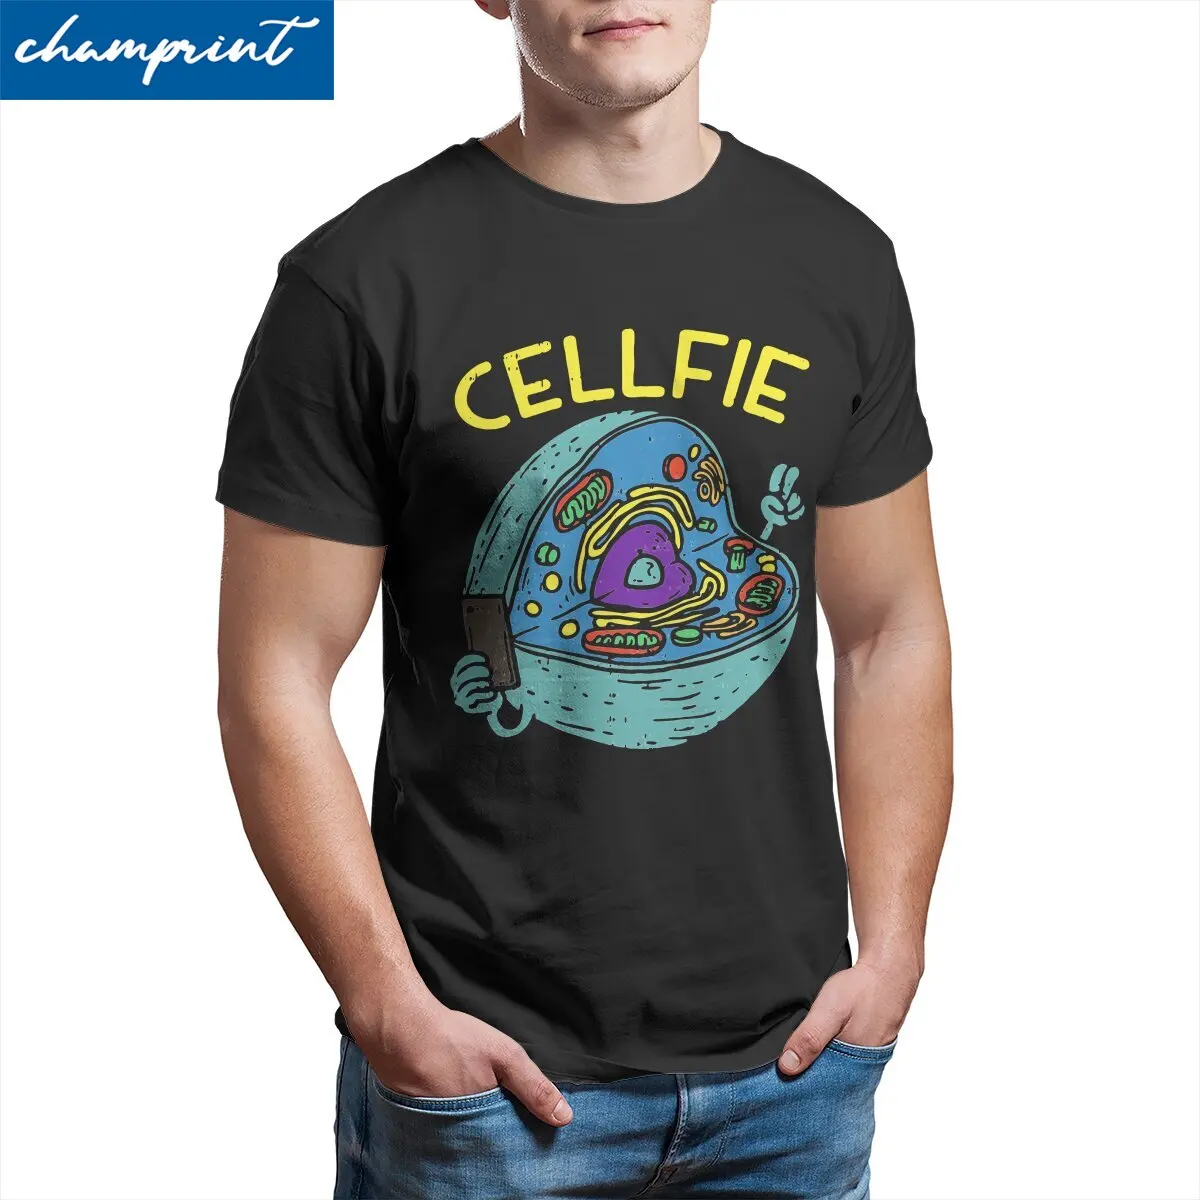 

Cell fie Biology Teacher T-Shirt for Men Chemistry Science Humor 100% Cotton Tee Shirt T Shirt Birthday Present Clothes